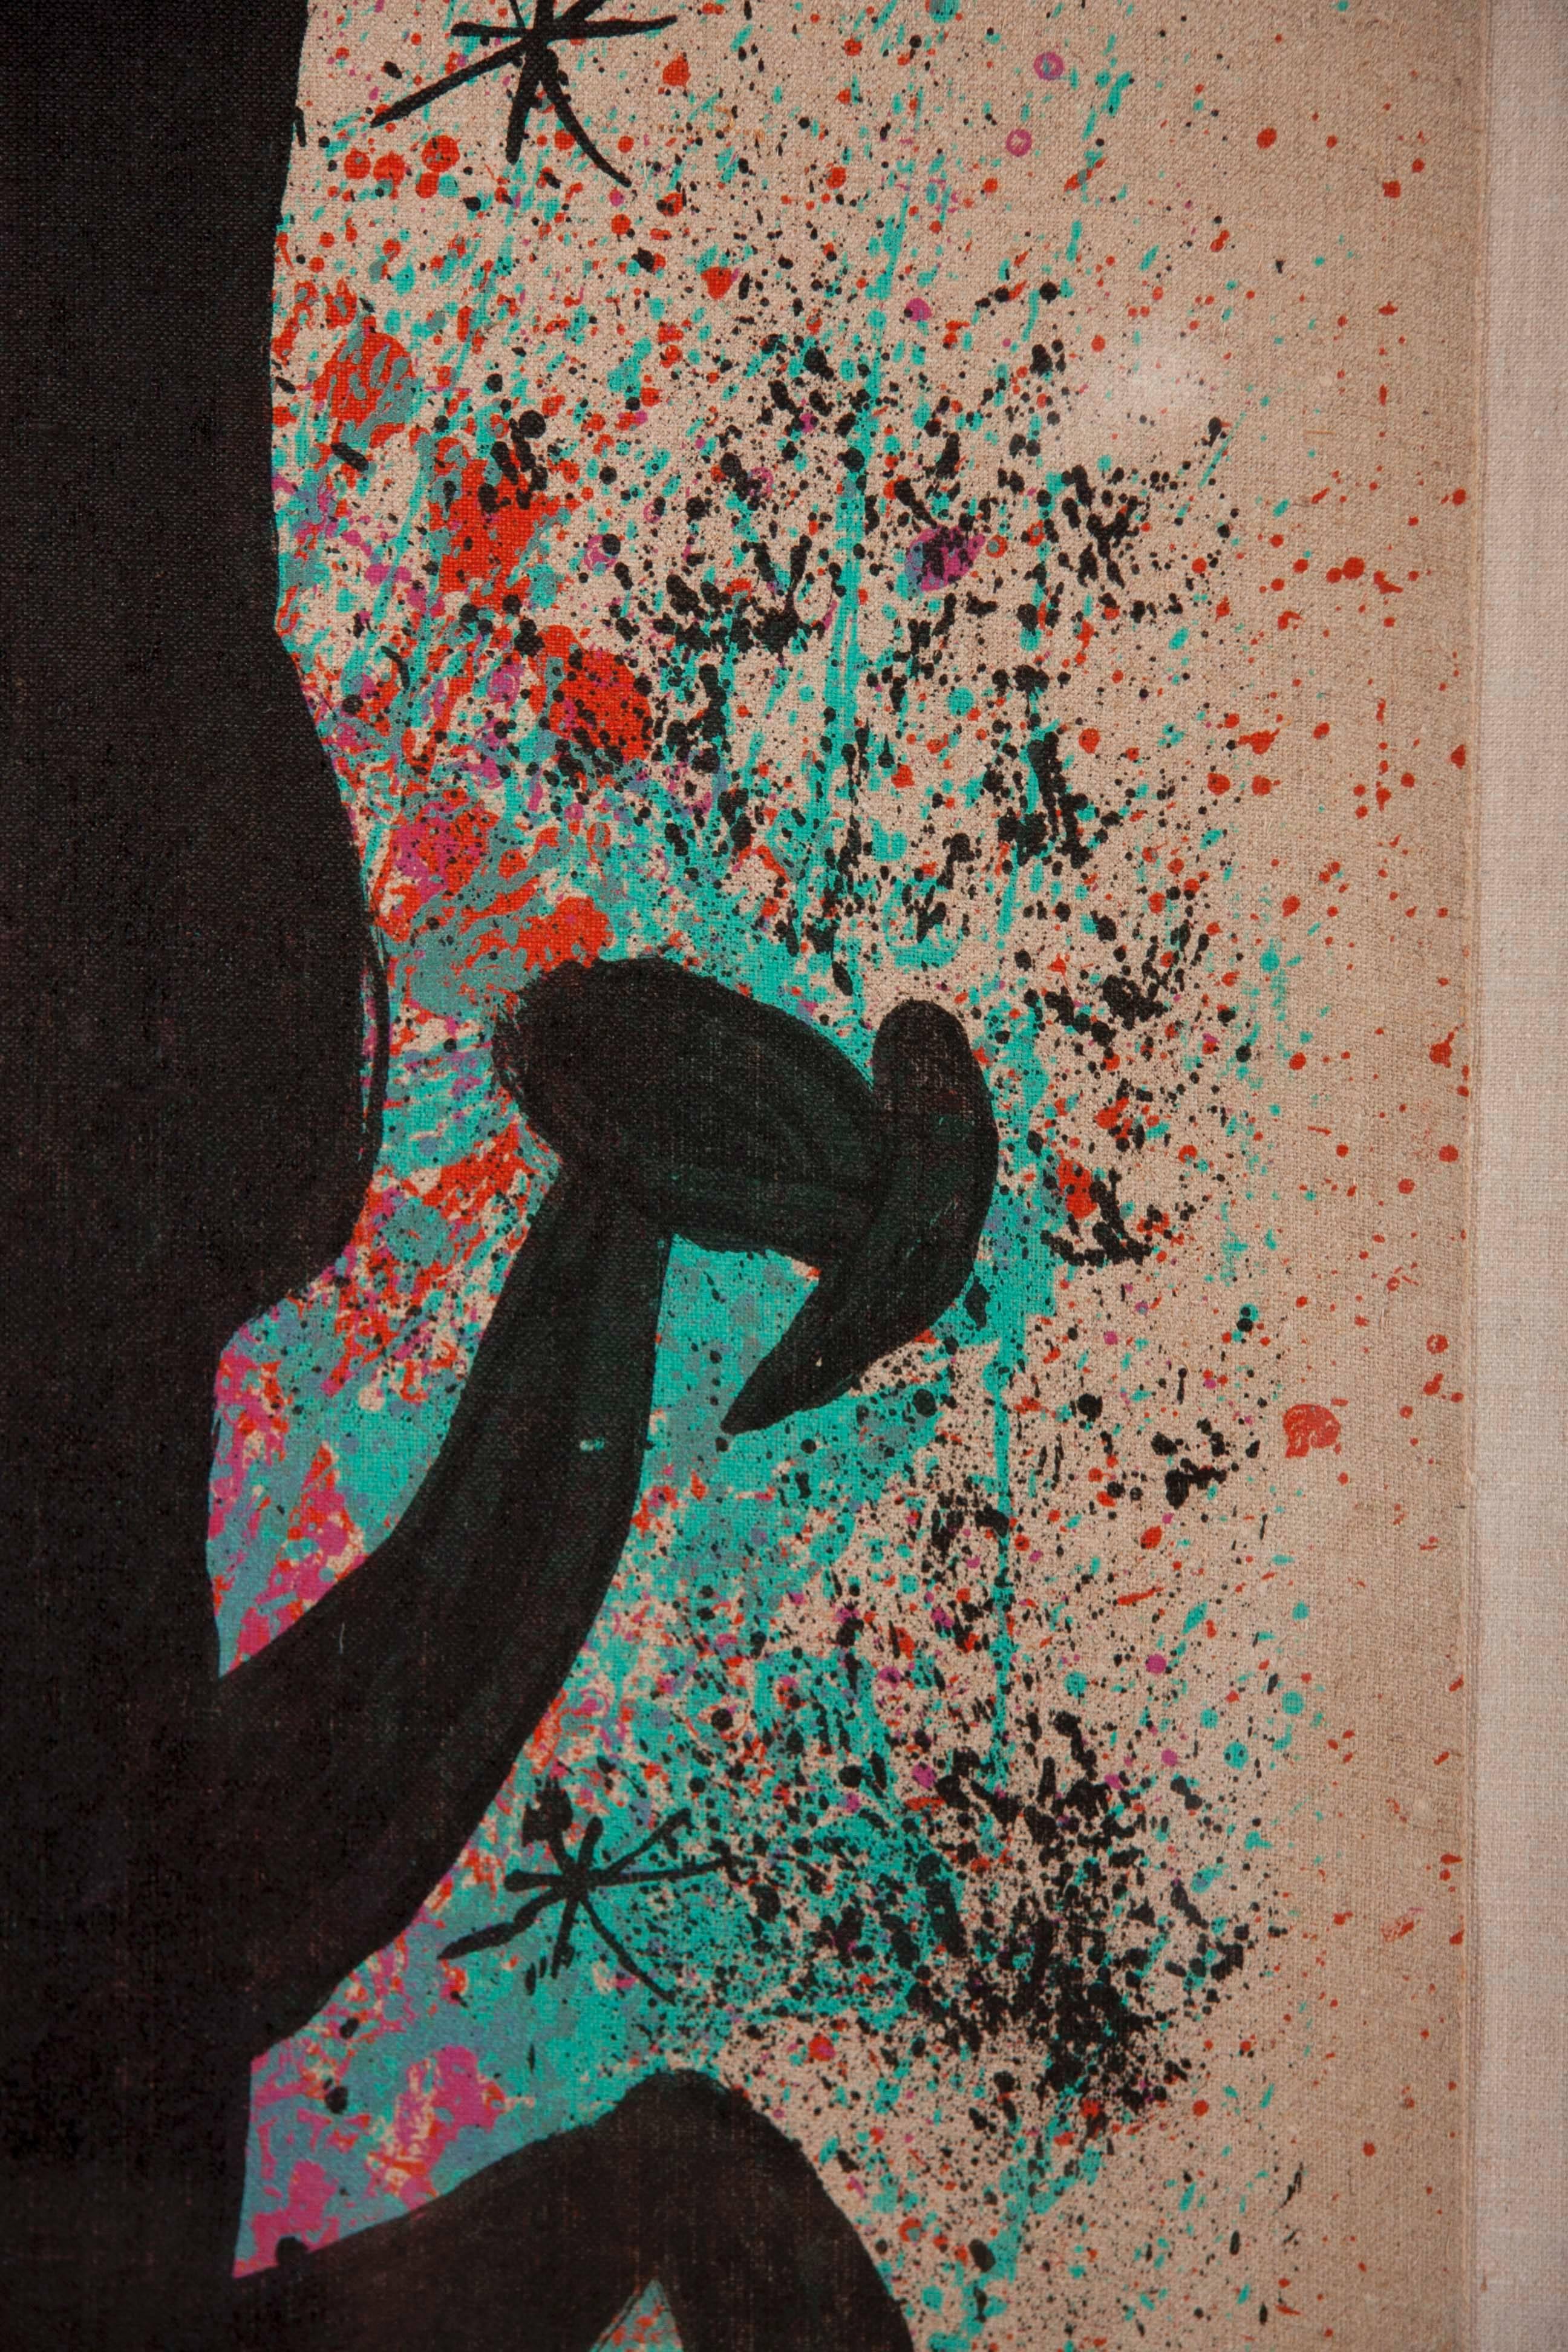 Carborundum Lithograph by Joan Miro 2